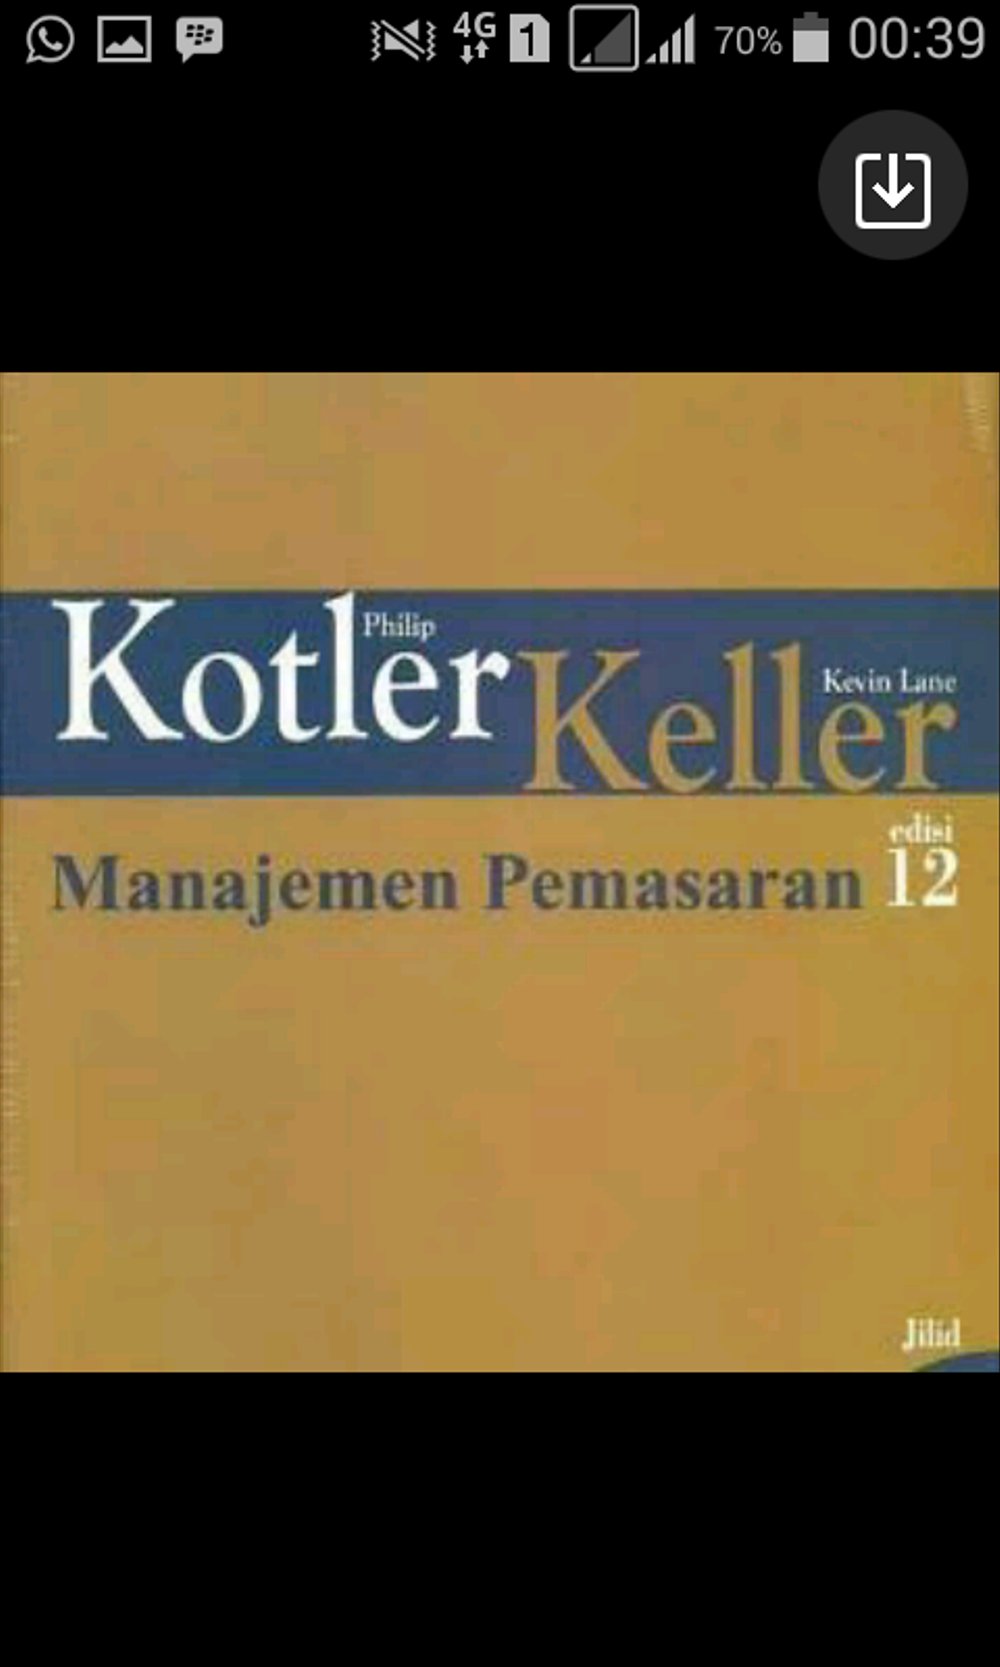 Buku Manajemen Pemasaran Philip Kotler Edisi 13 Jilid 1 Pdf